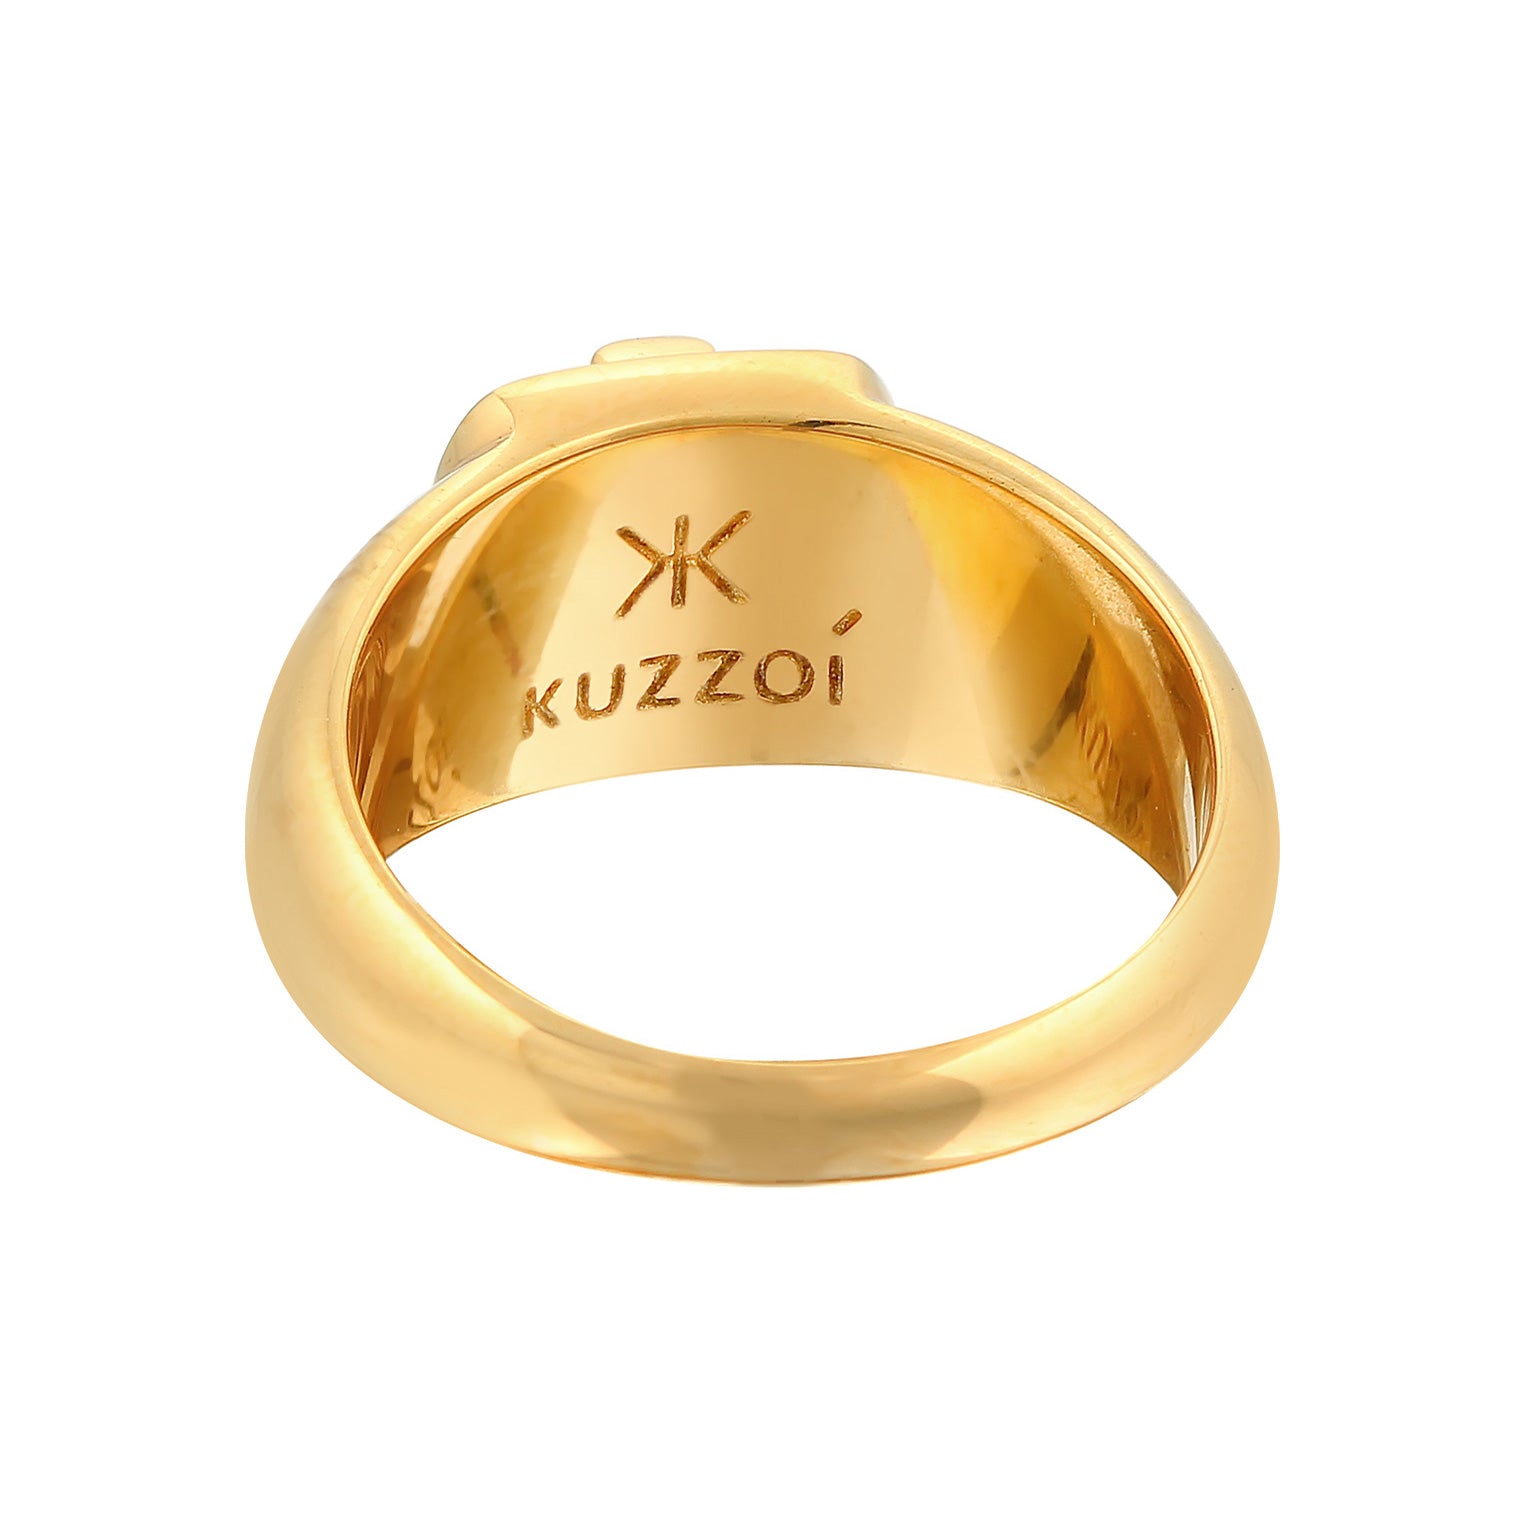 Gold - KUZZOI | Siegelring Wappen | 925er Sterling Silber vergoldet